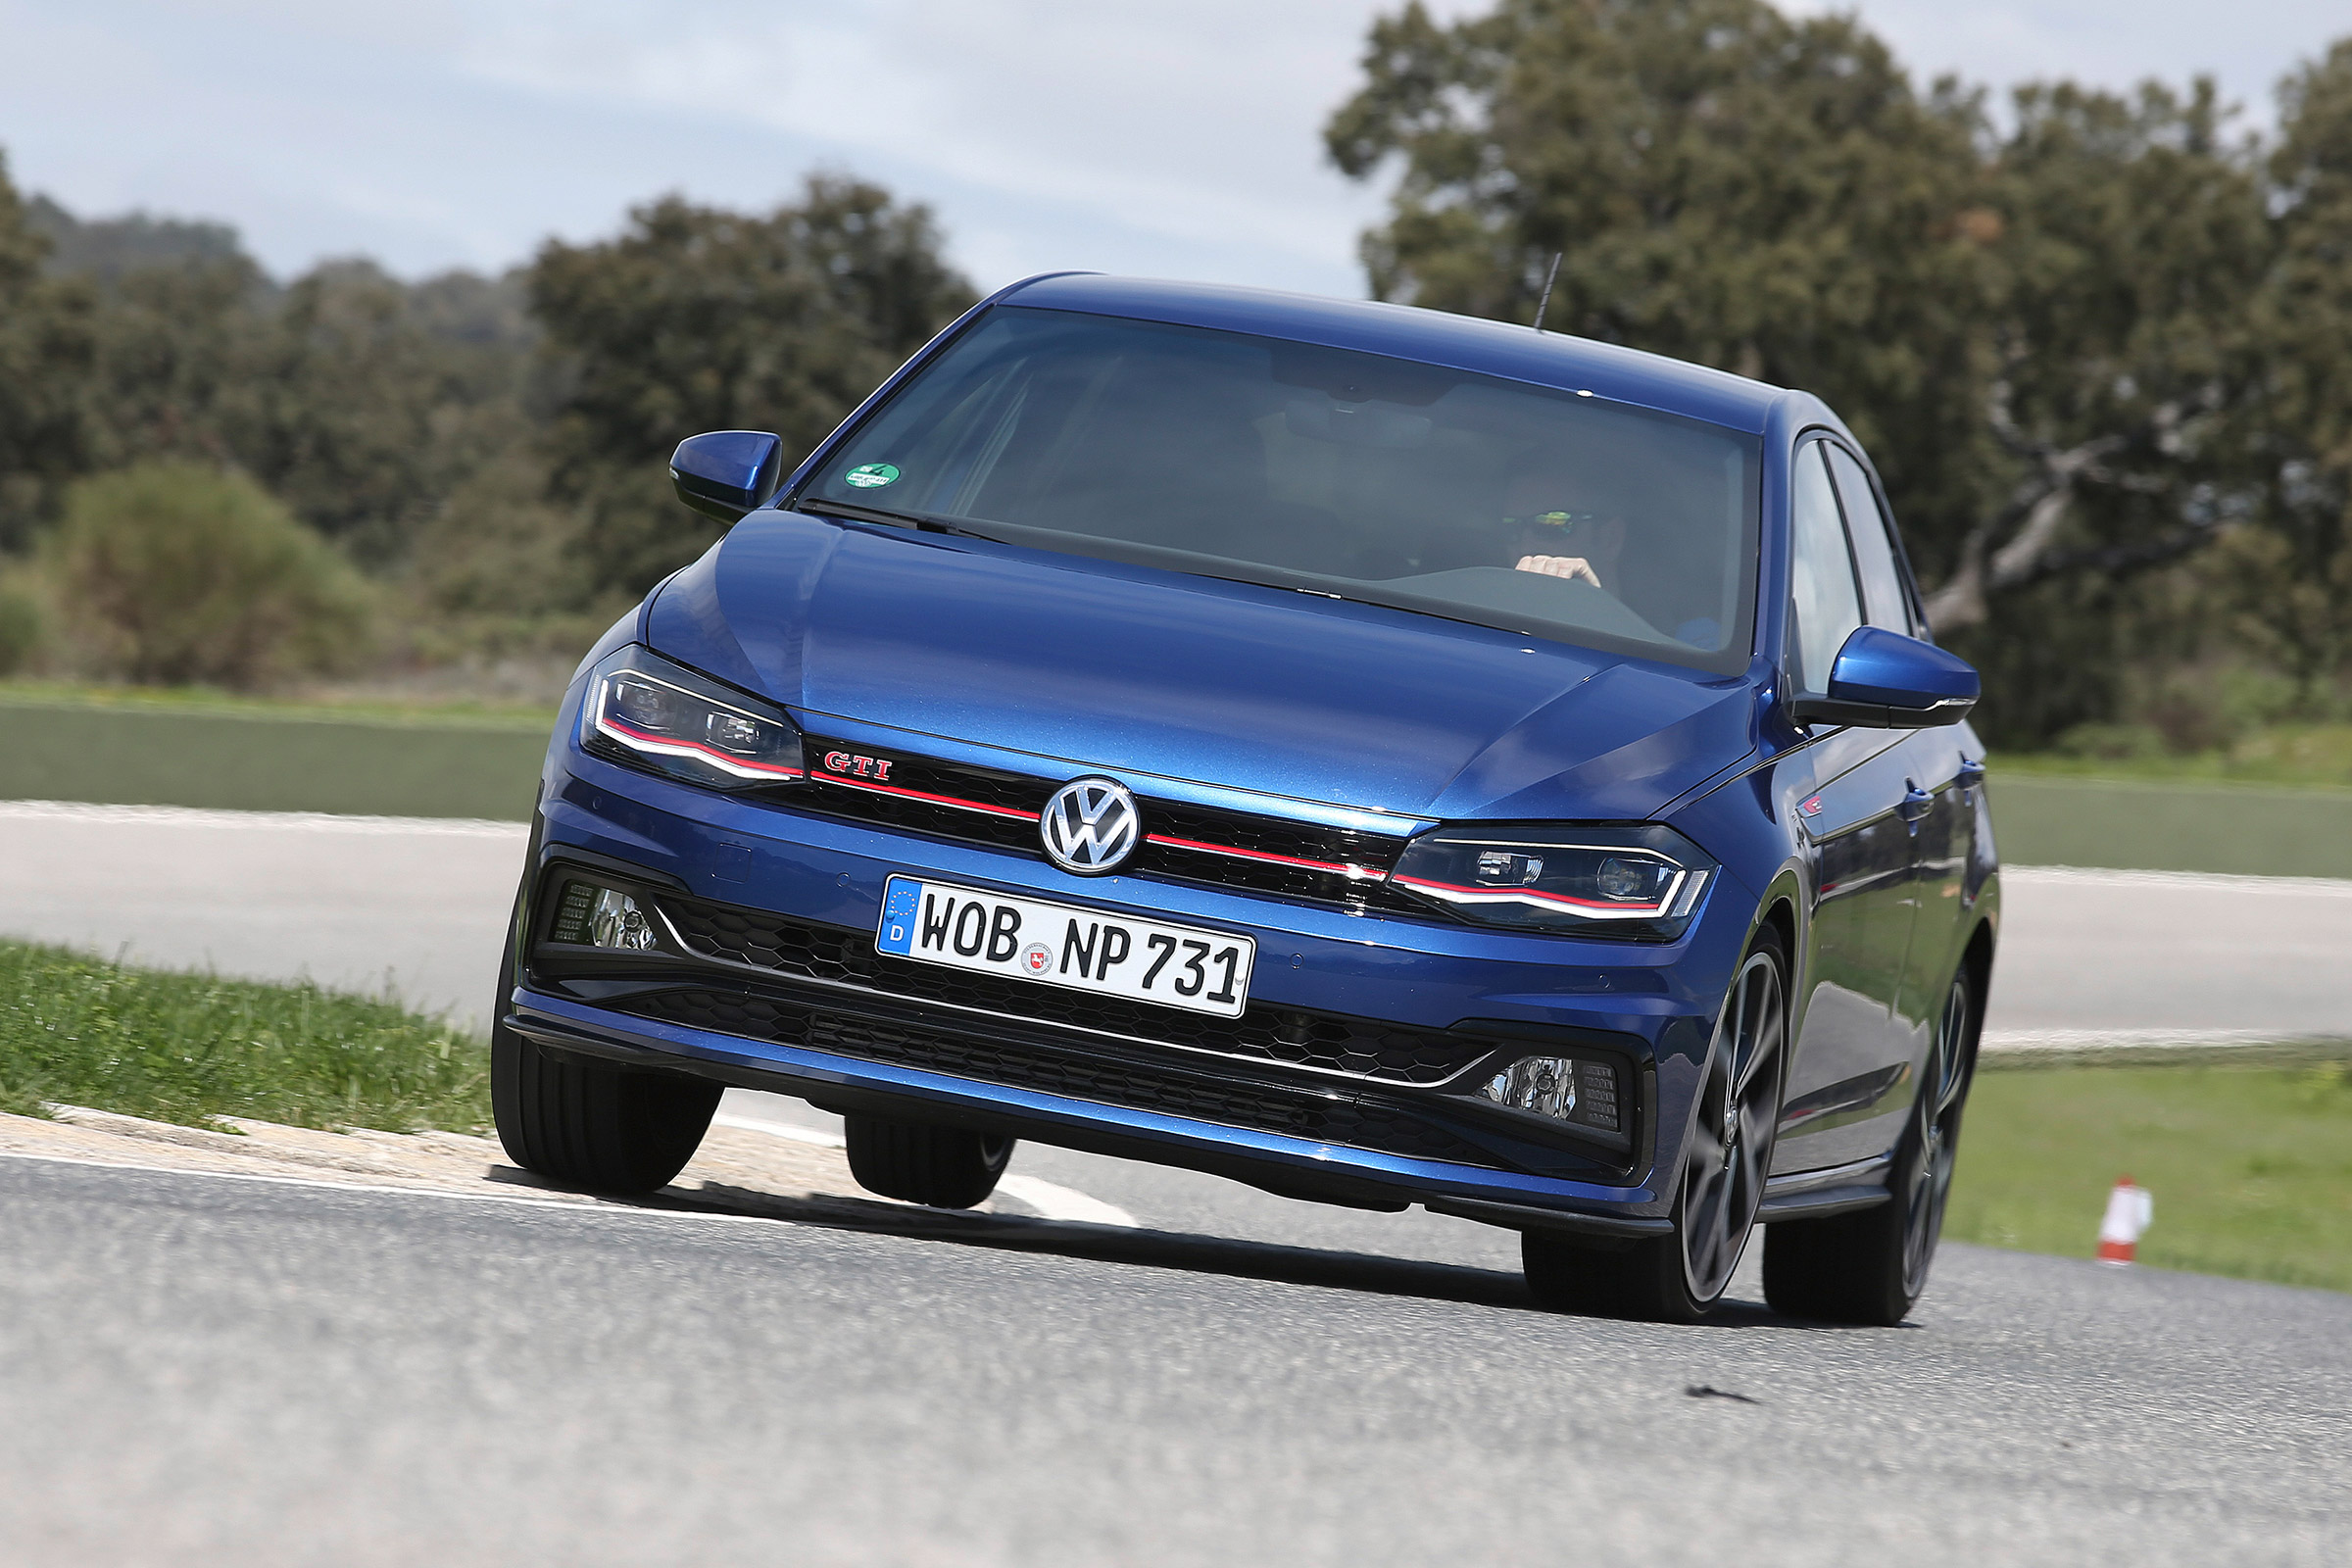 VW GTI – a polished performer, but it lacks flair | evo